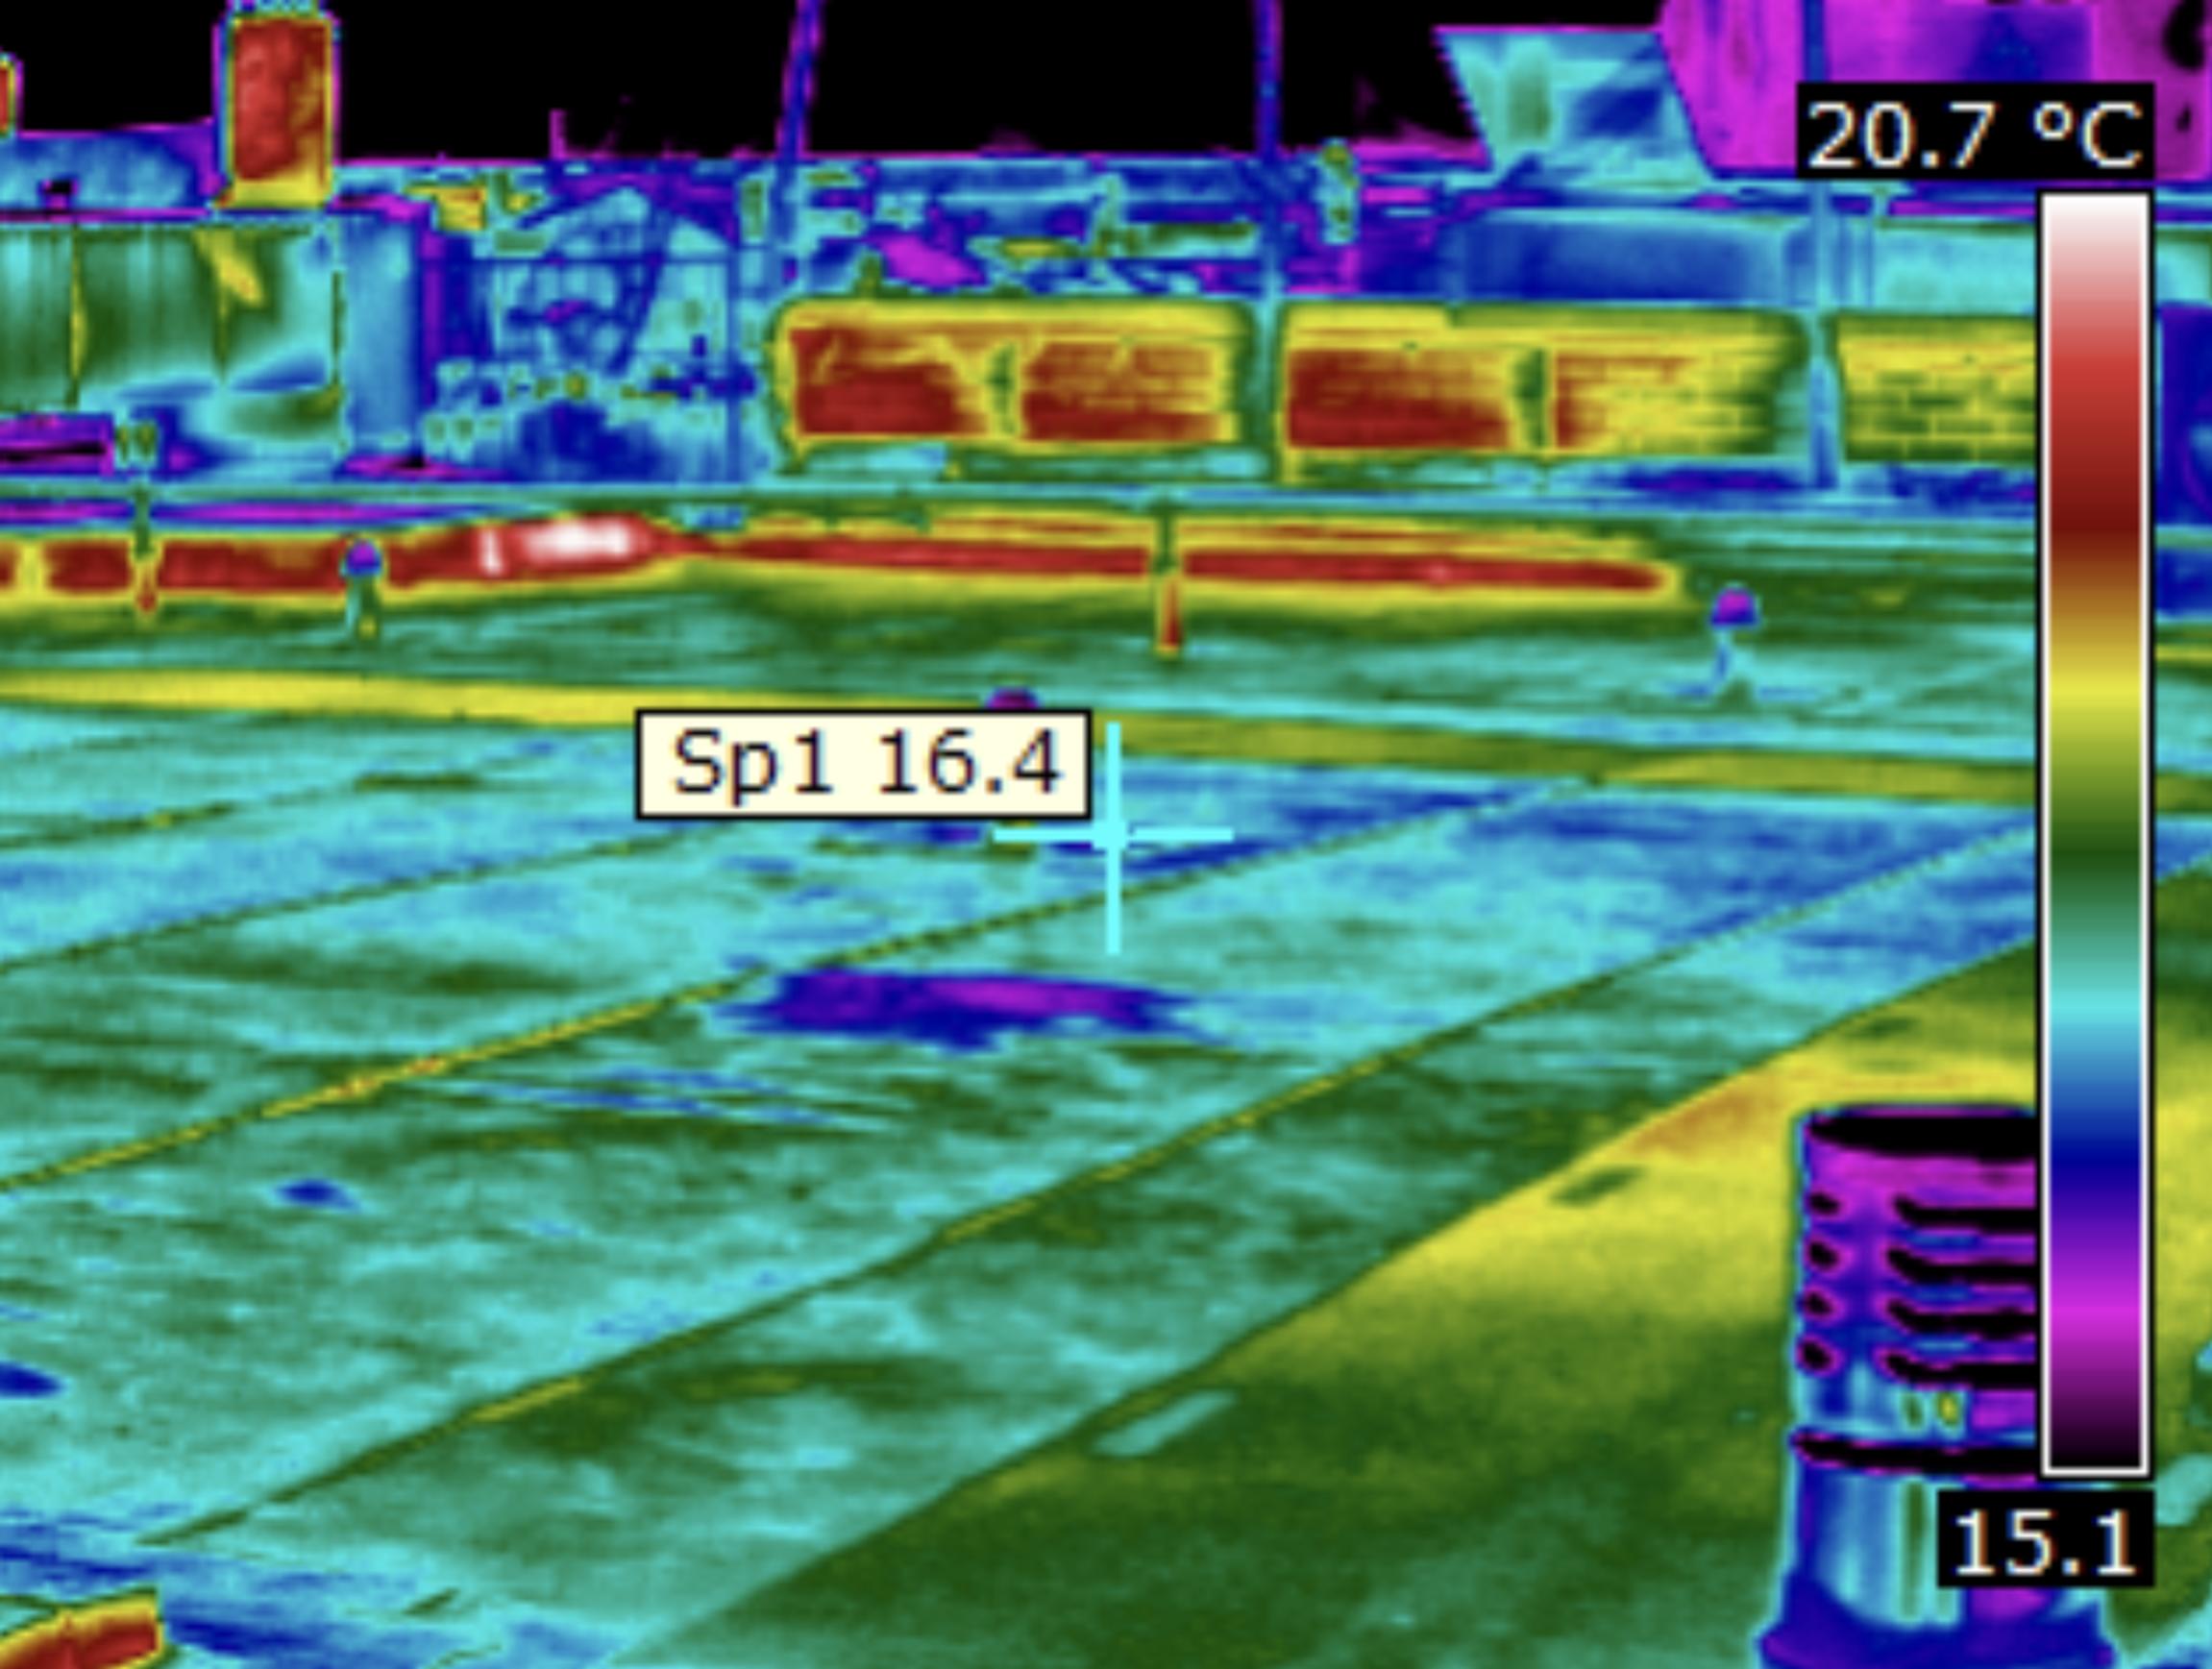 A midwave camera scan of a car park deck